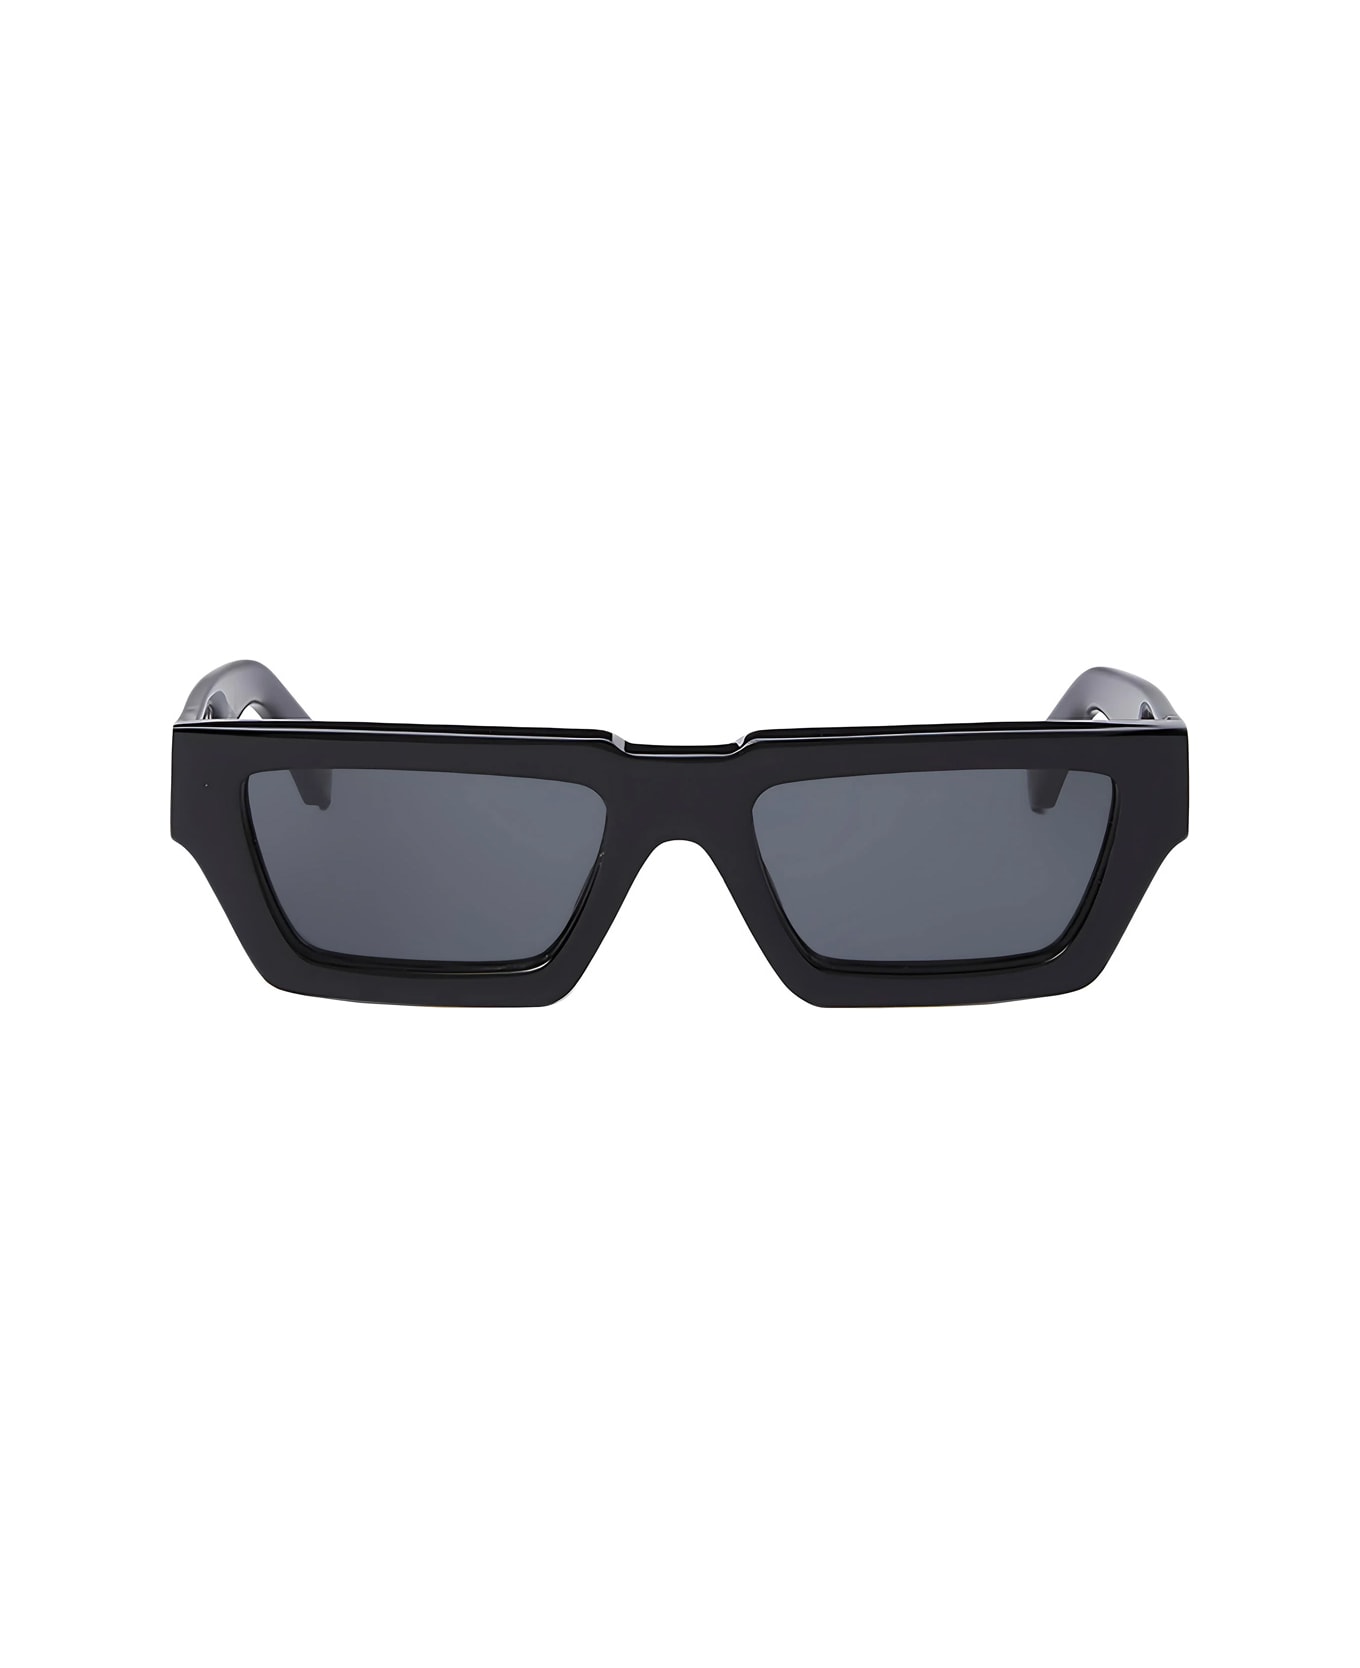 Off-White Oeri129 Manchester 1007 Black Sunglasses - Nero サングラス